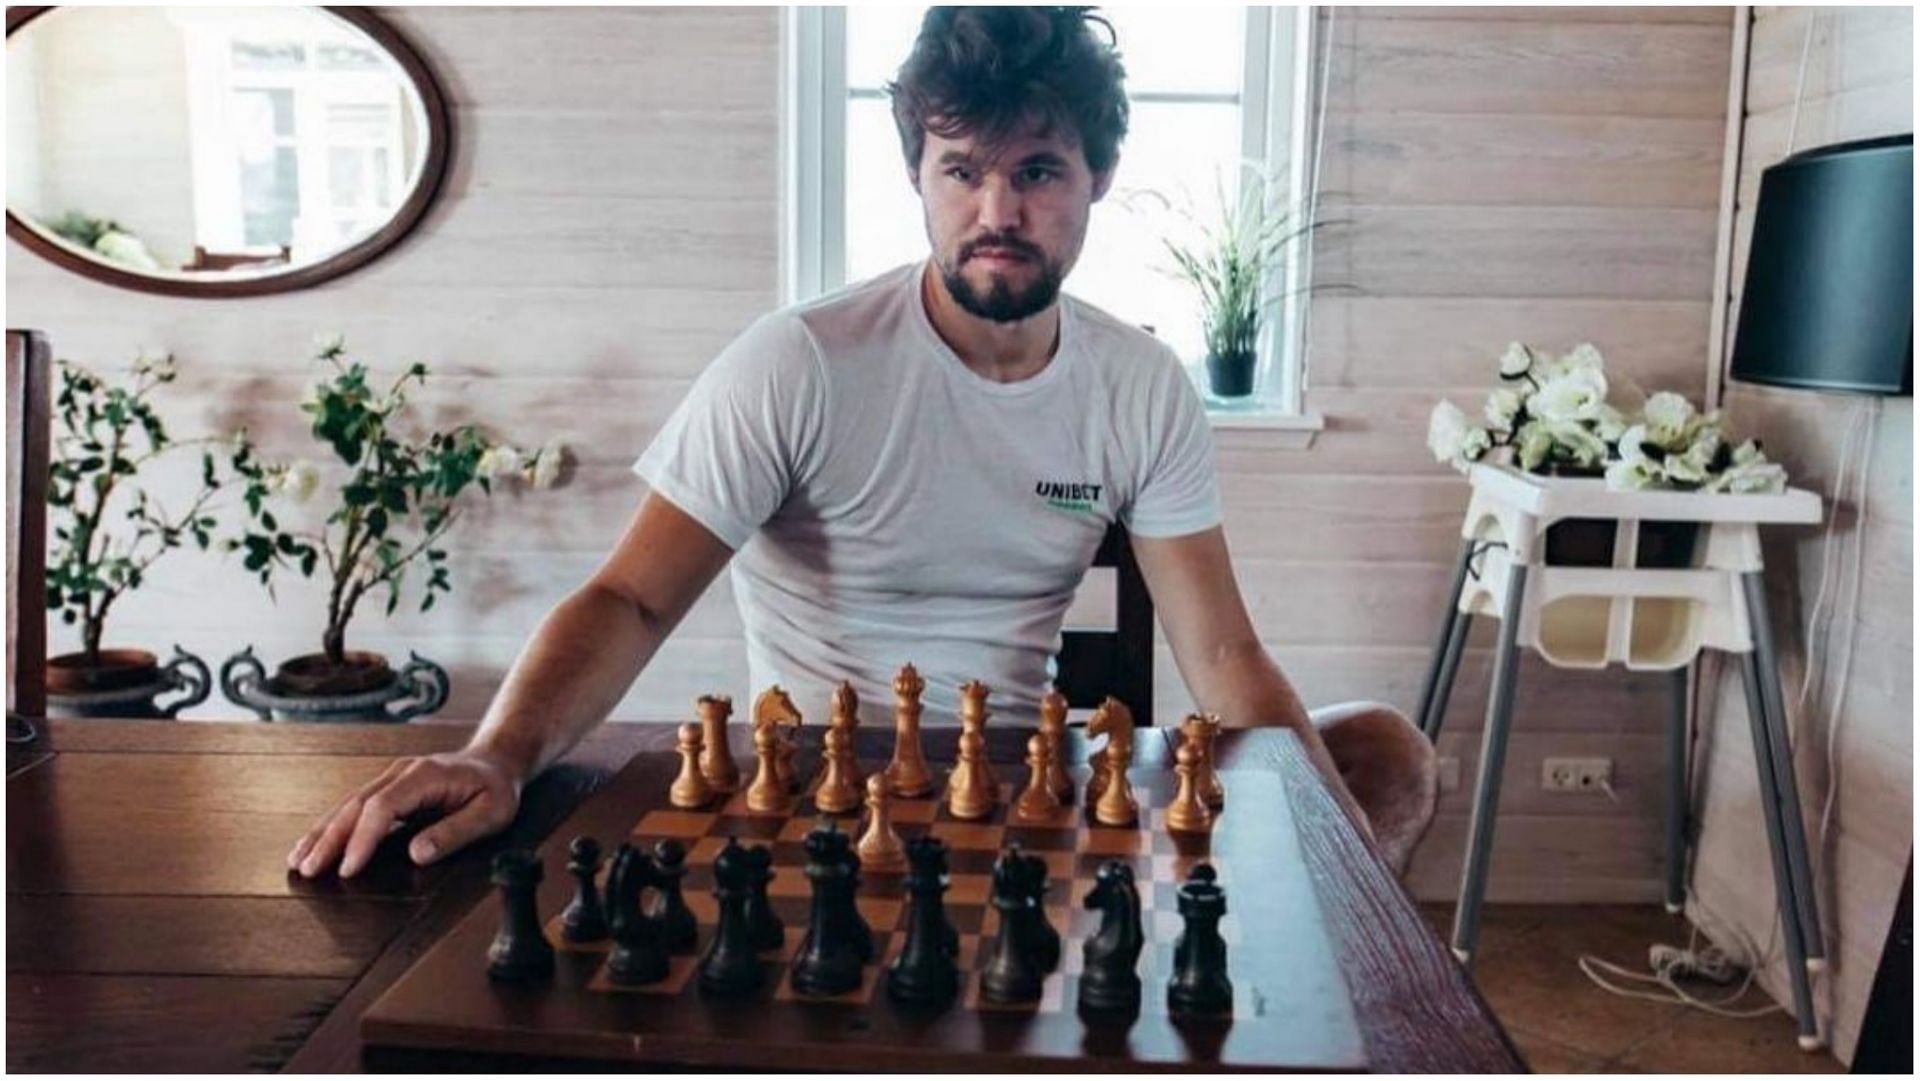 Magnus Carlsen Wins Third World Chess Championship